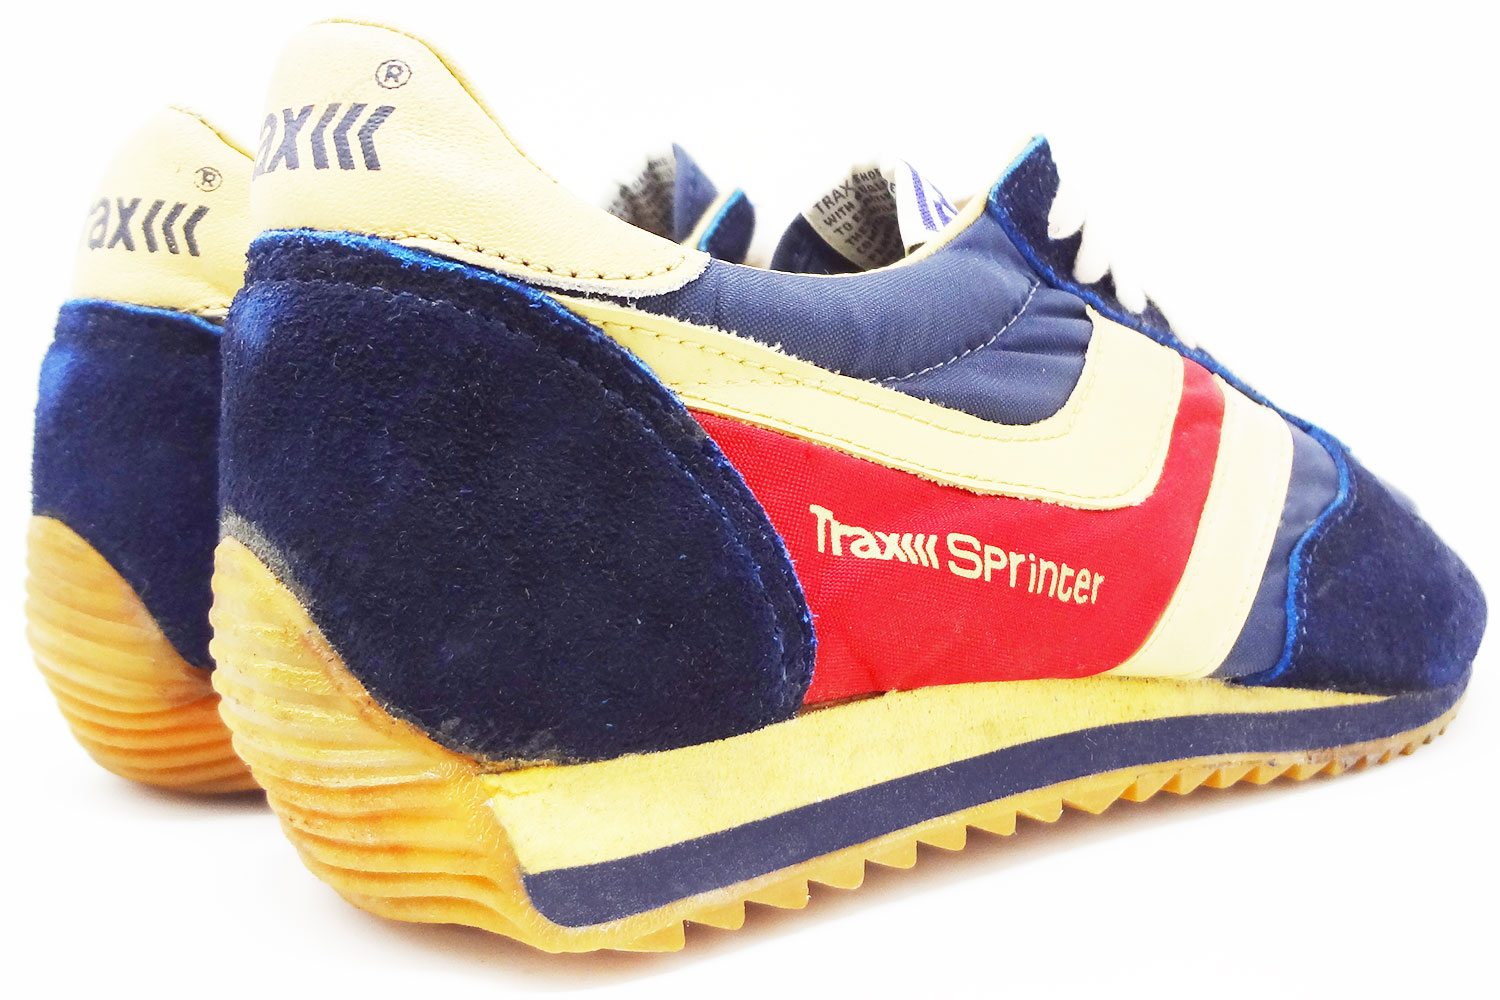 Retro Trax Sprinter vintage sneakers @ The Deffest